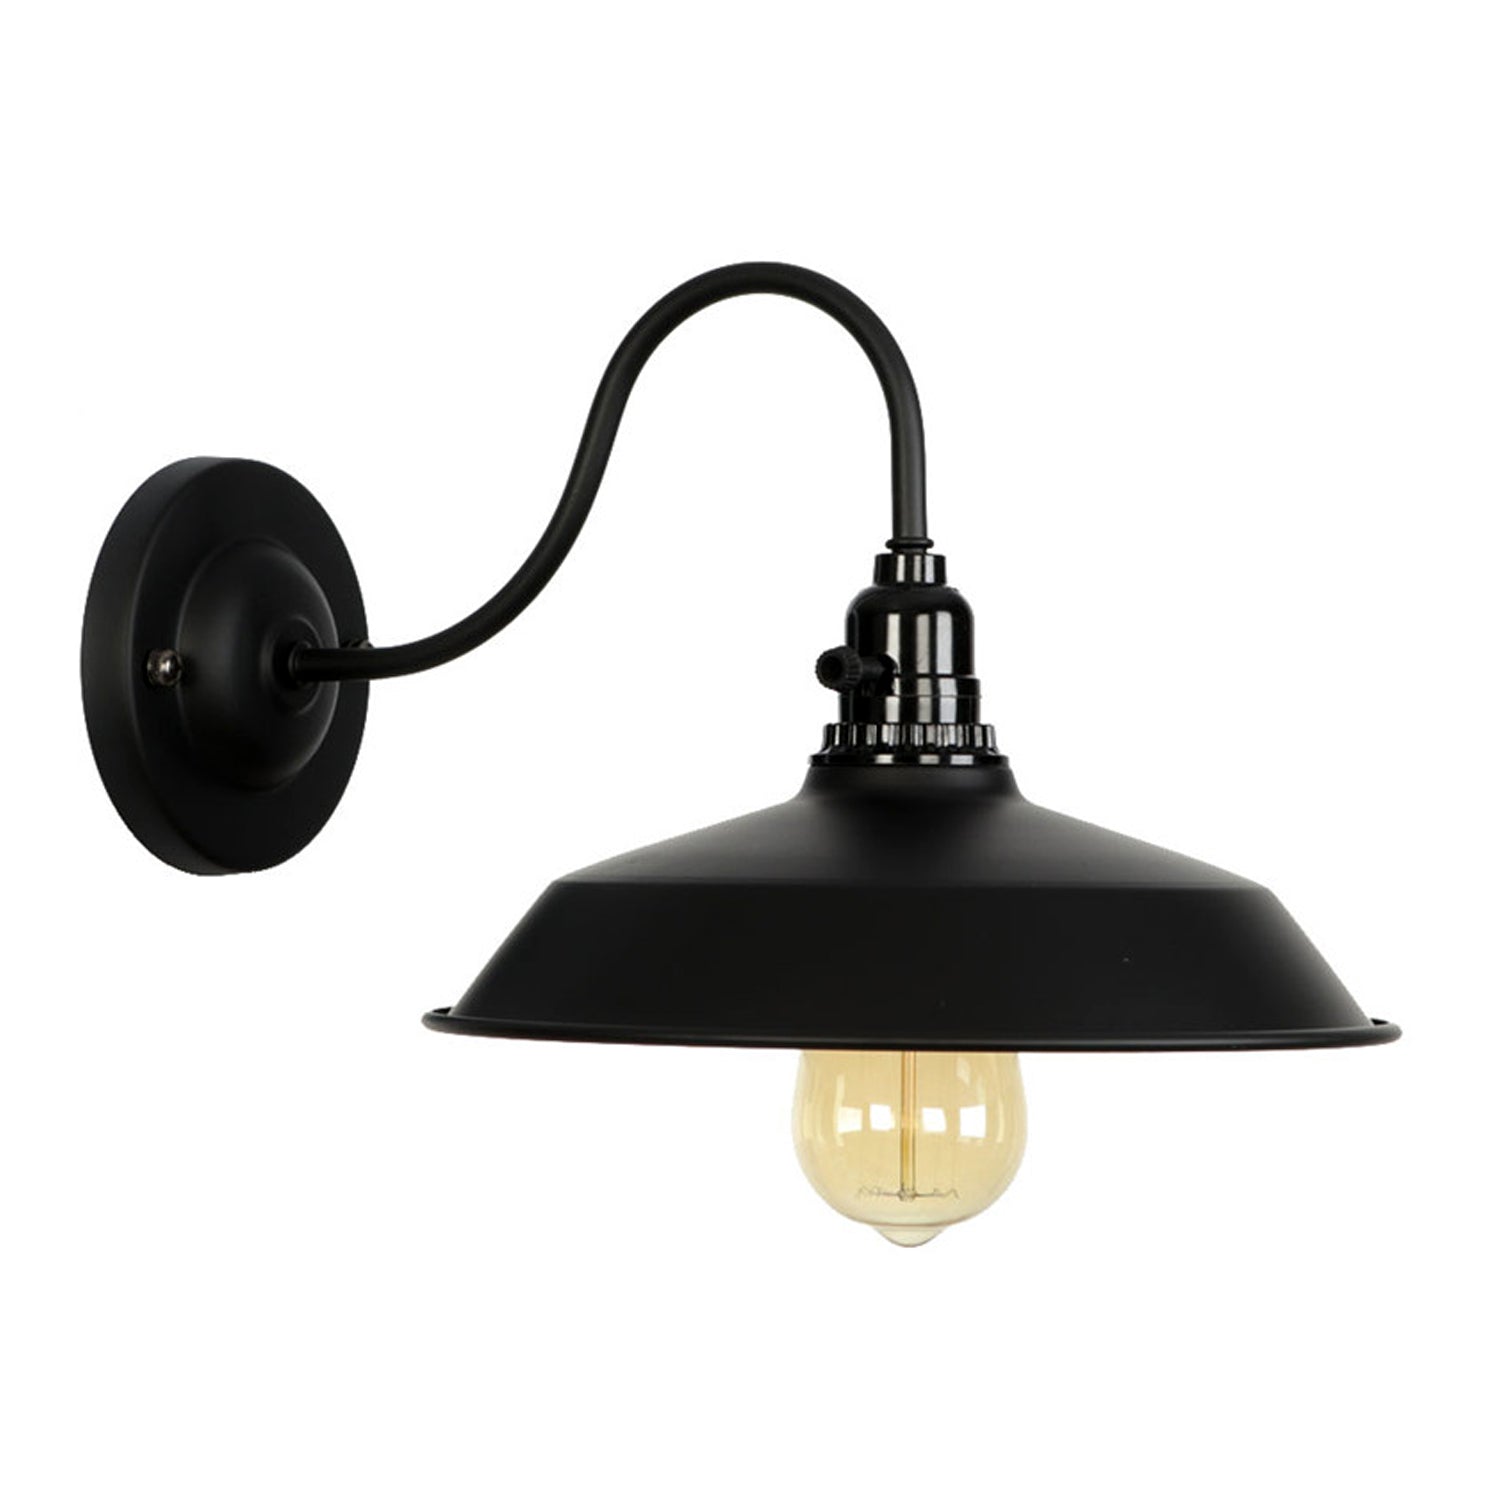 Modern Retro Vintage Industrial Wall Mounted Light Rustic Sconce Lamp Fixture~2677 - LEDSone UK Ltd